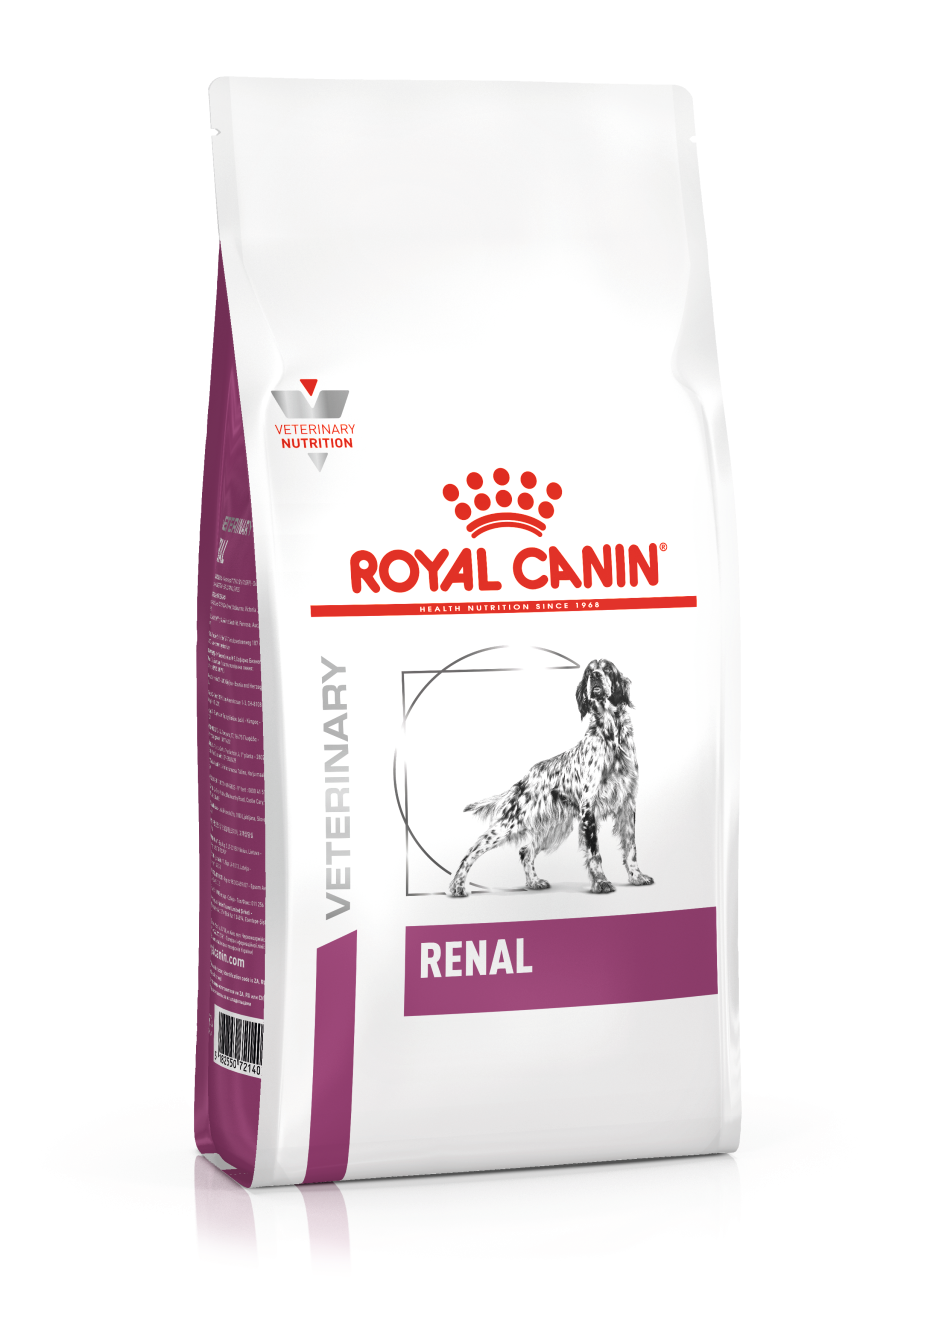 Royal Canin Renal hond <br> 2x 14 kg